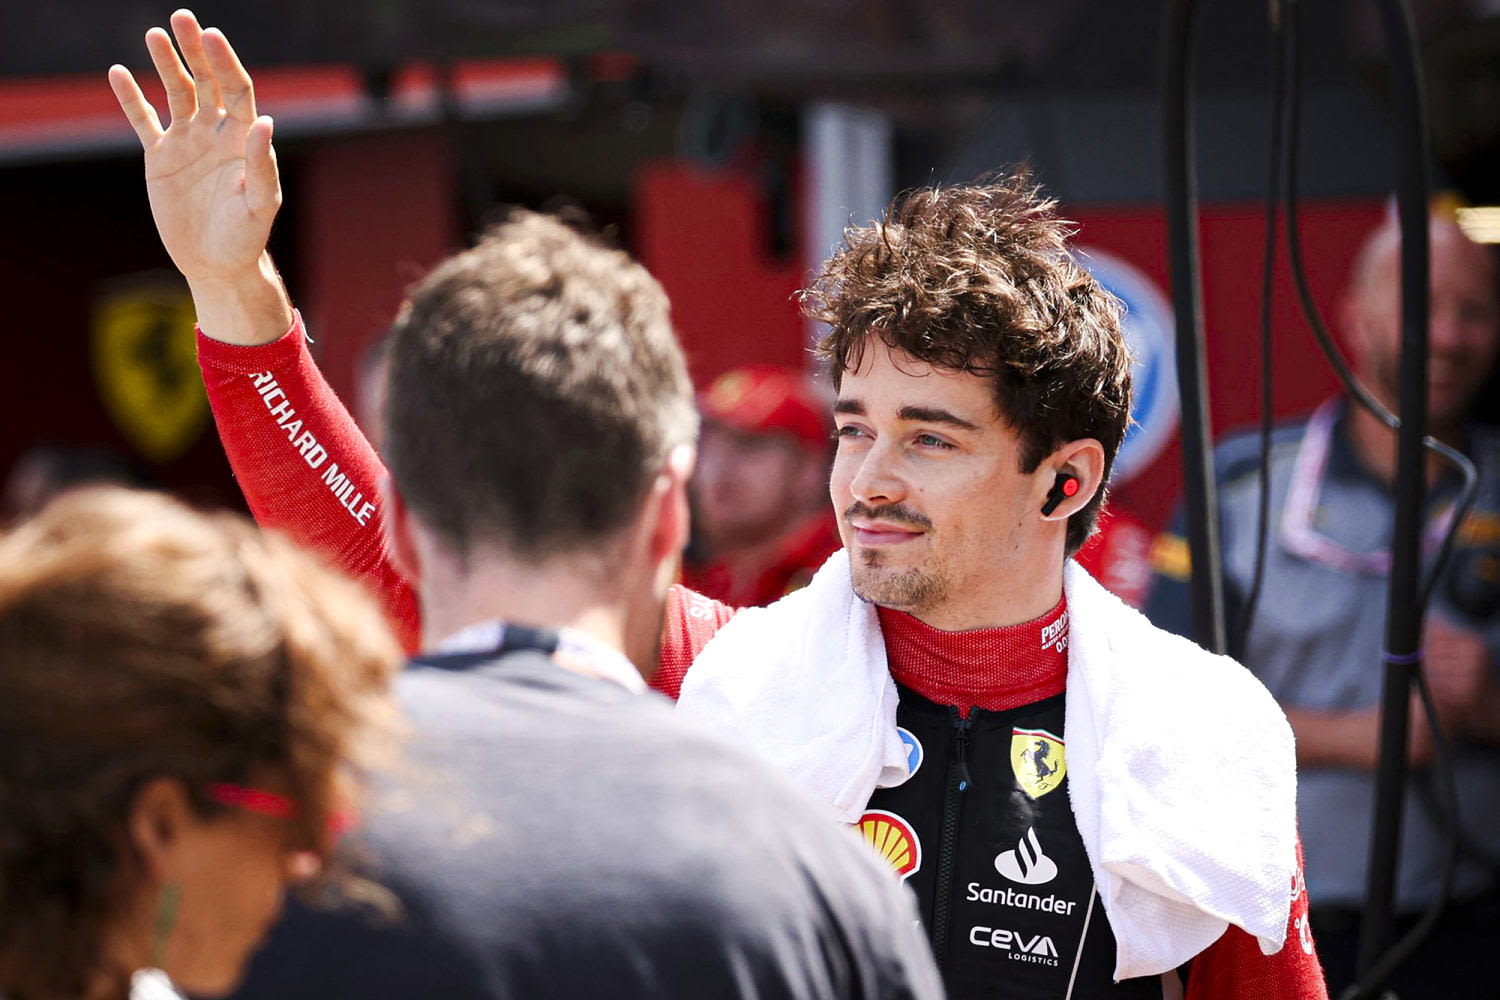 Ferrari's Charles Leclerc wins home F1 race in Monaco, breaking the 'curse'